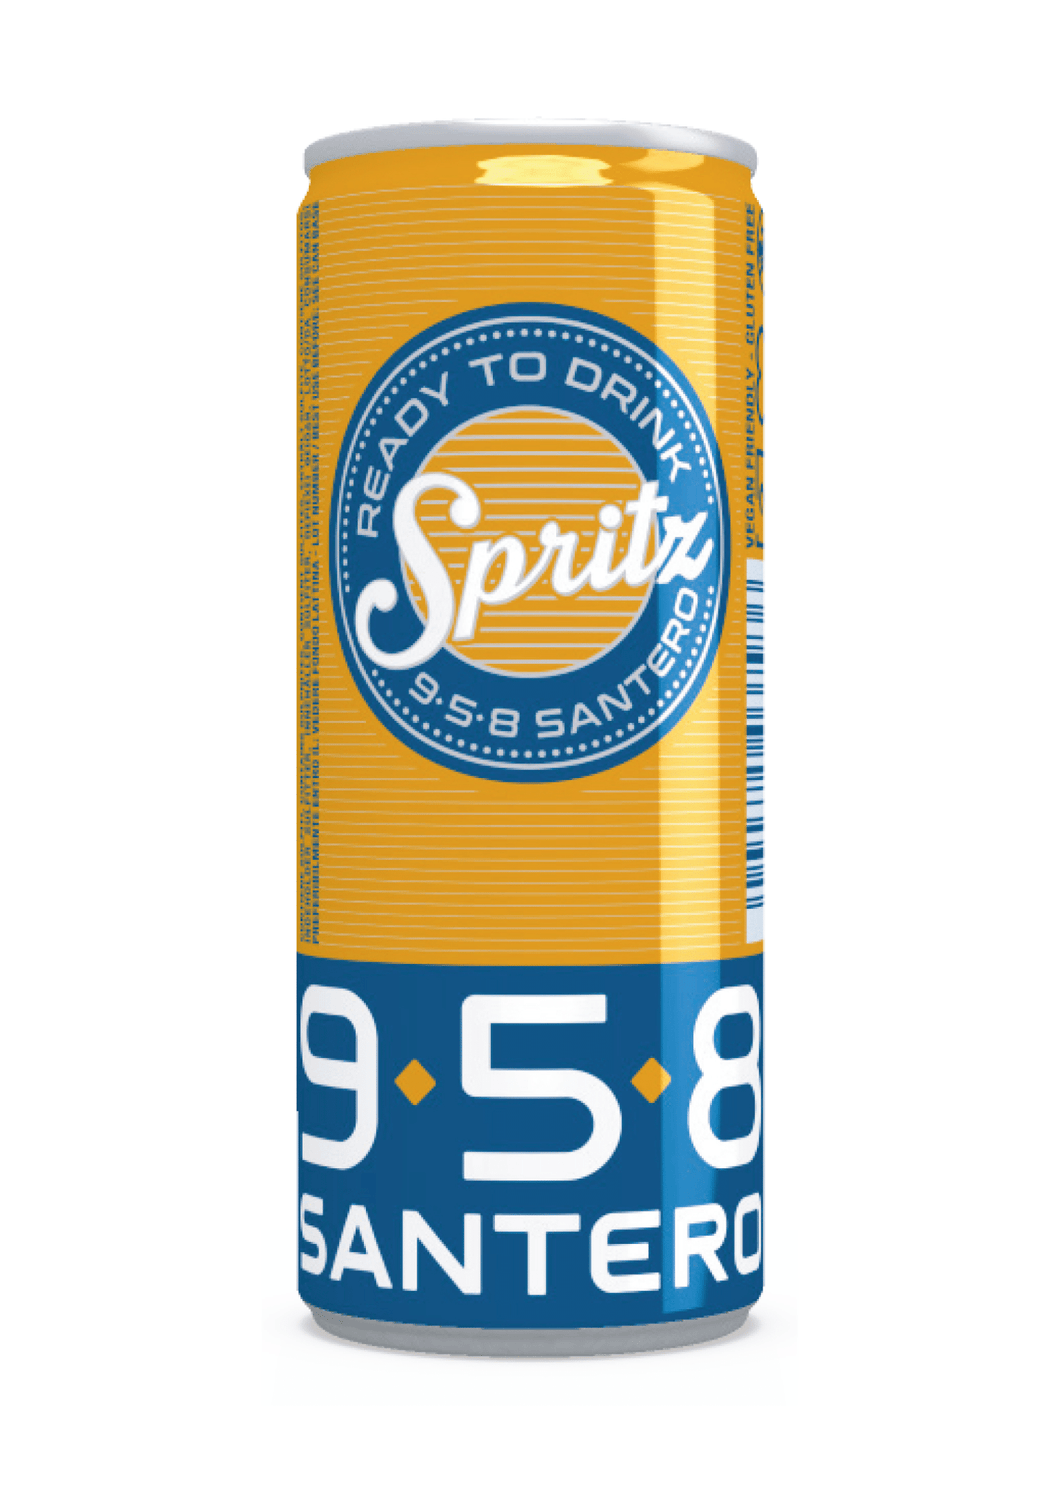 958 Santero spritz ready to drink can